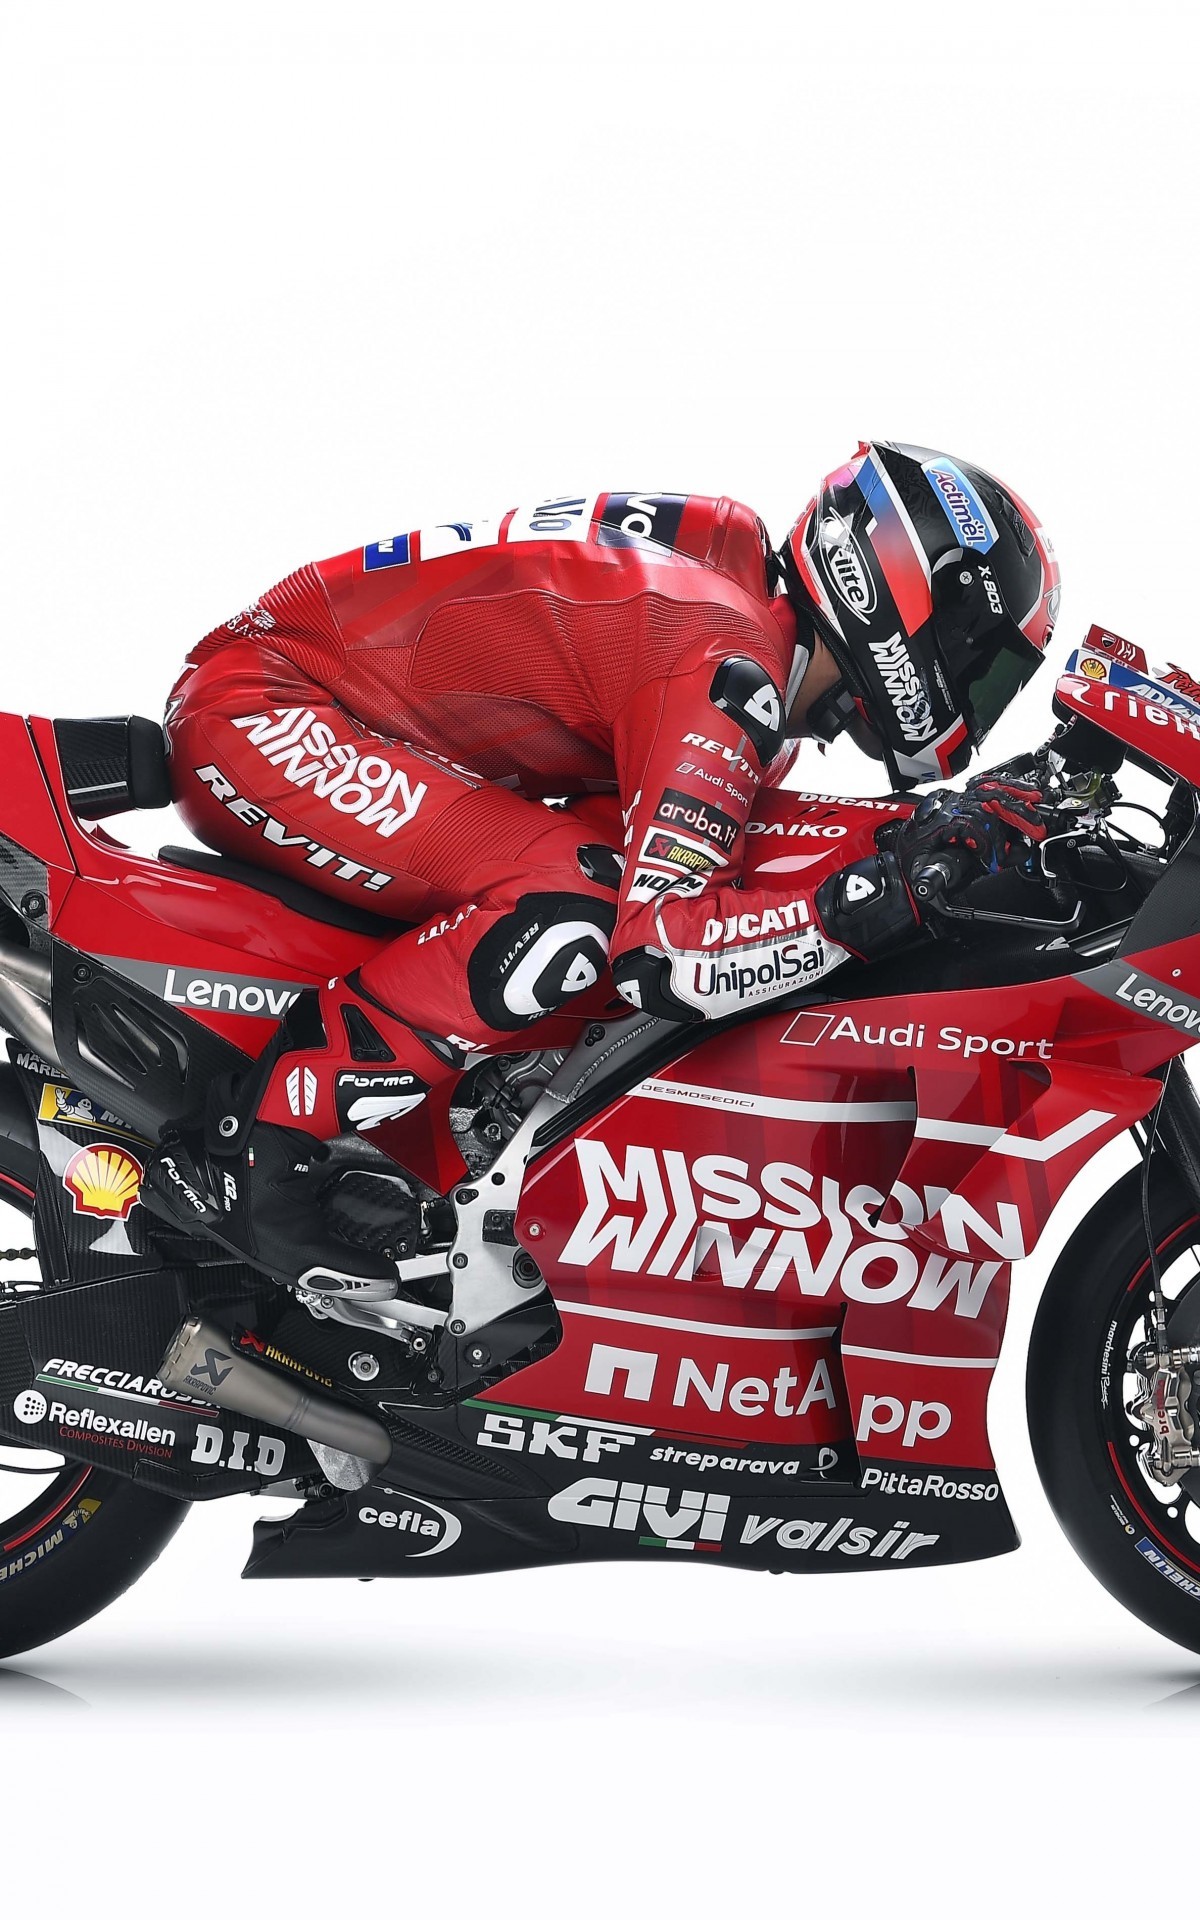 Motogp 2019, Ducati Desmosedici Gp19, Racing Motorcycle - HD Wallpaper 